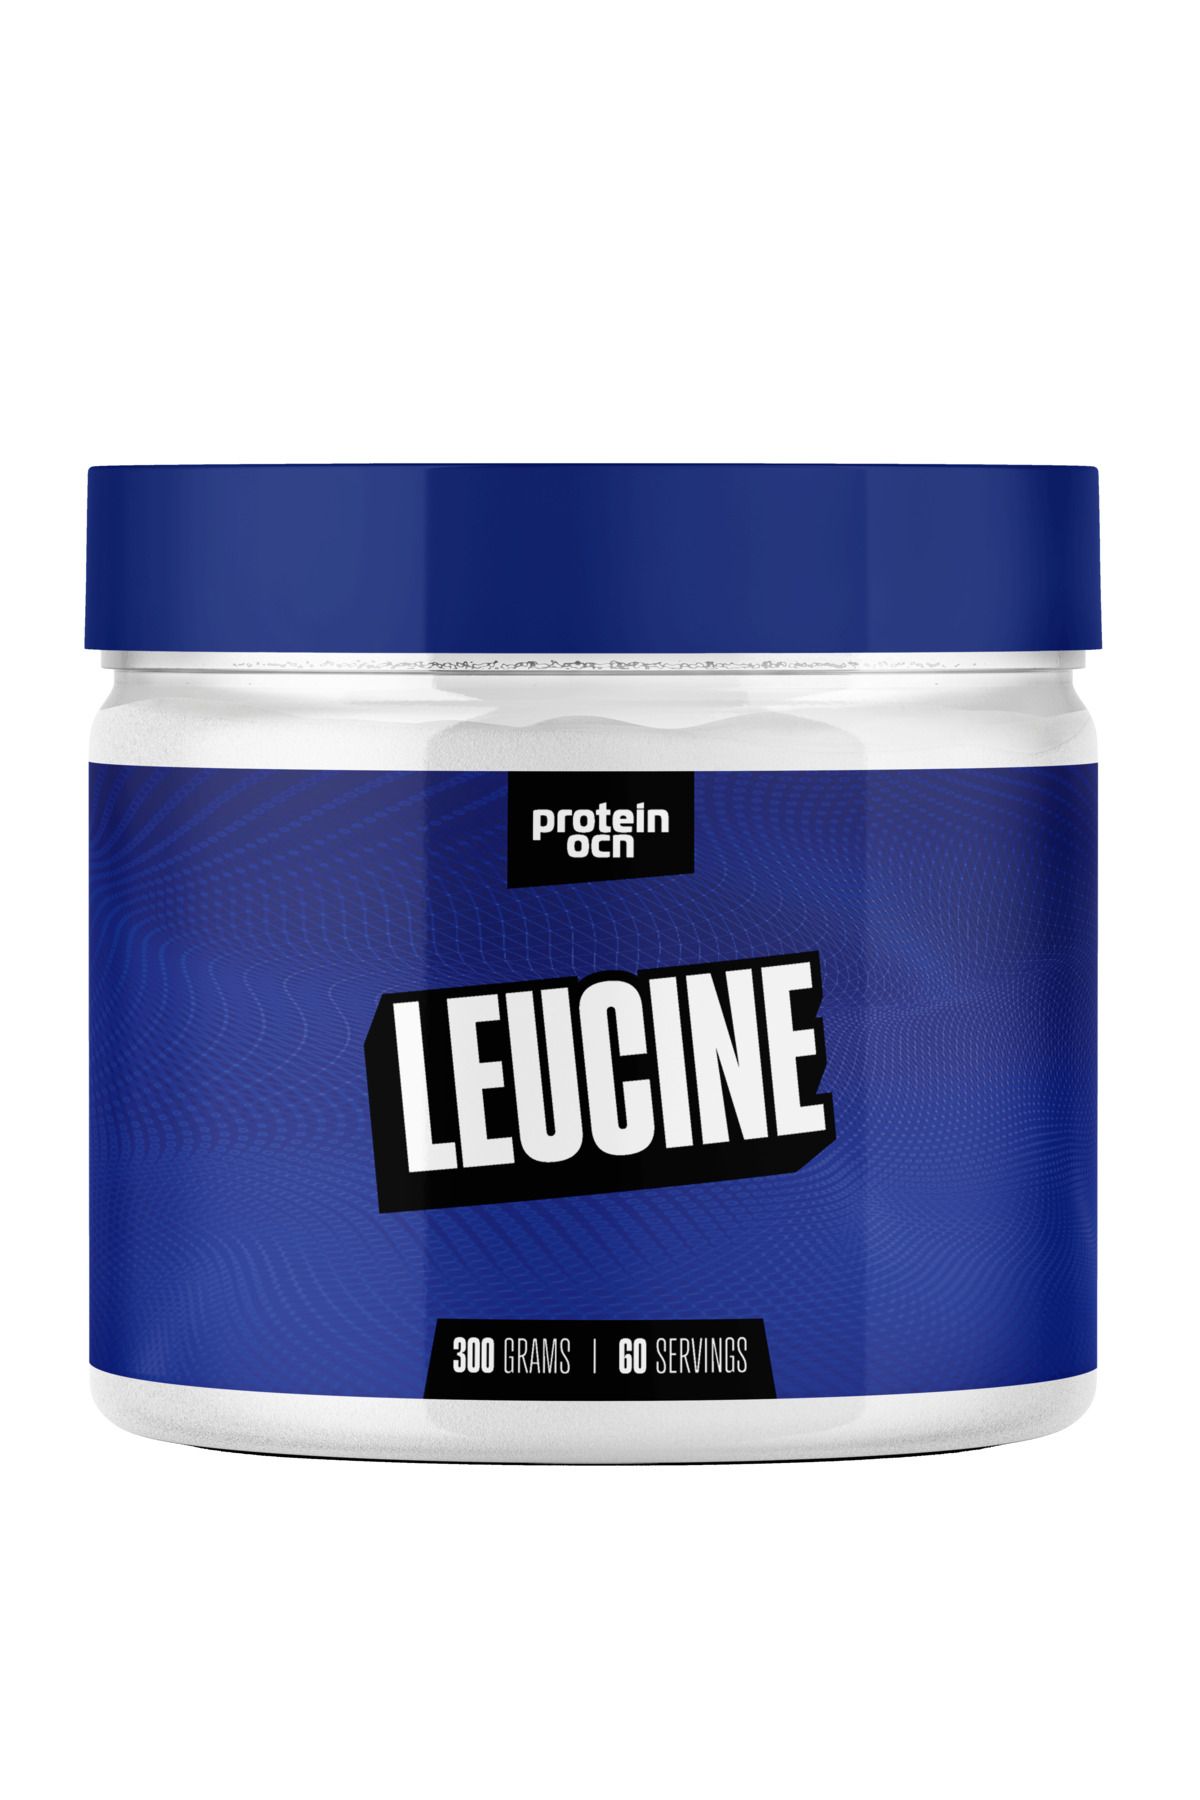 Proteinocean Leucine 300g - 60 Servis